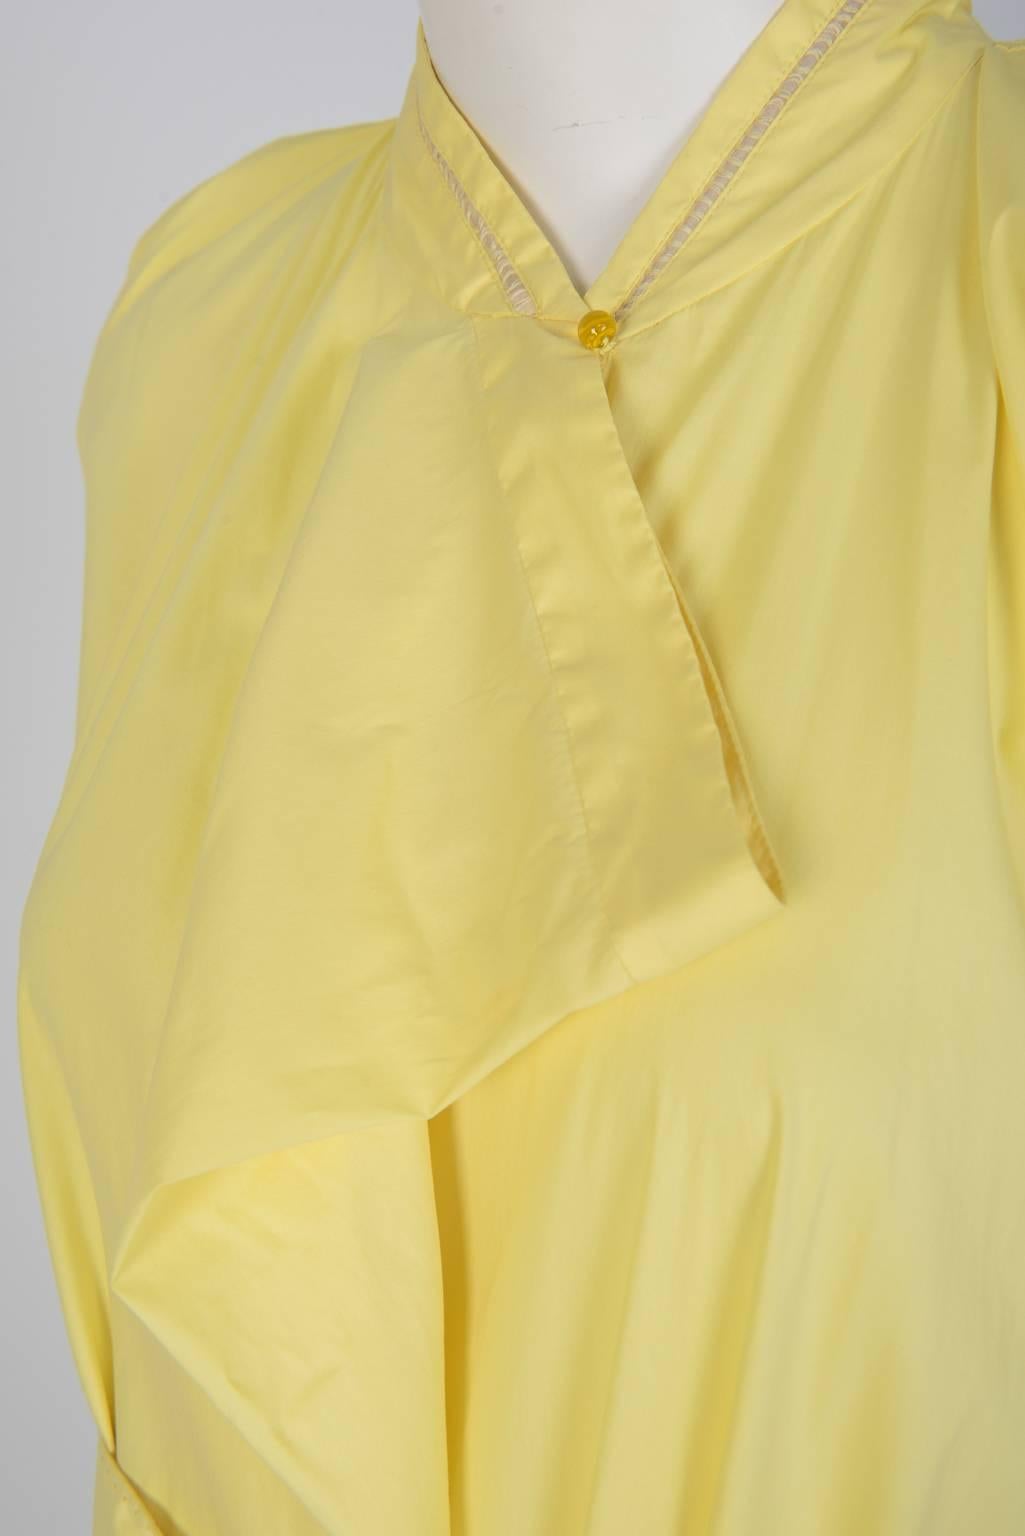  ZAC POSEN Yellow Sun Dress For Sale 1